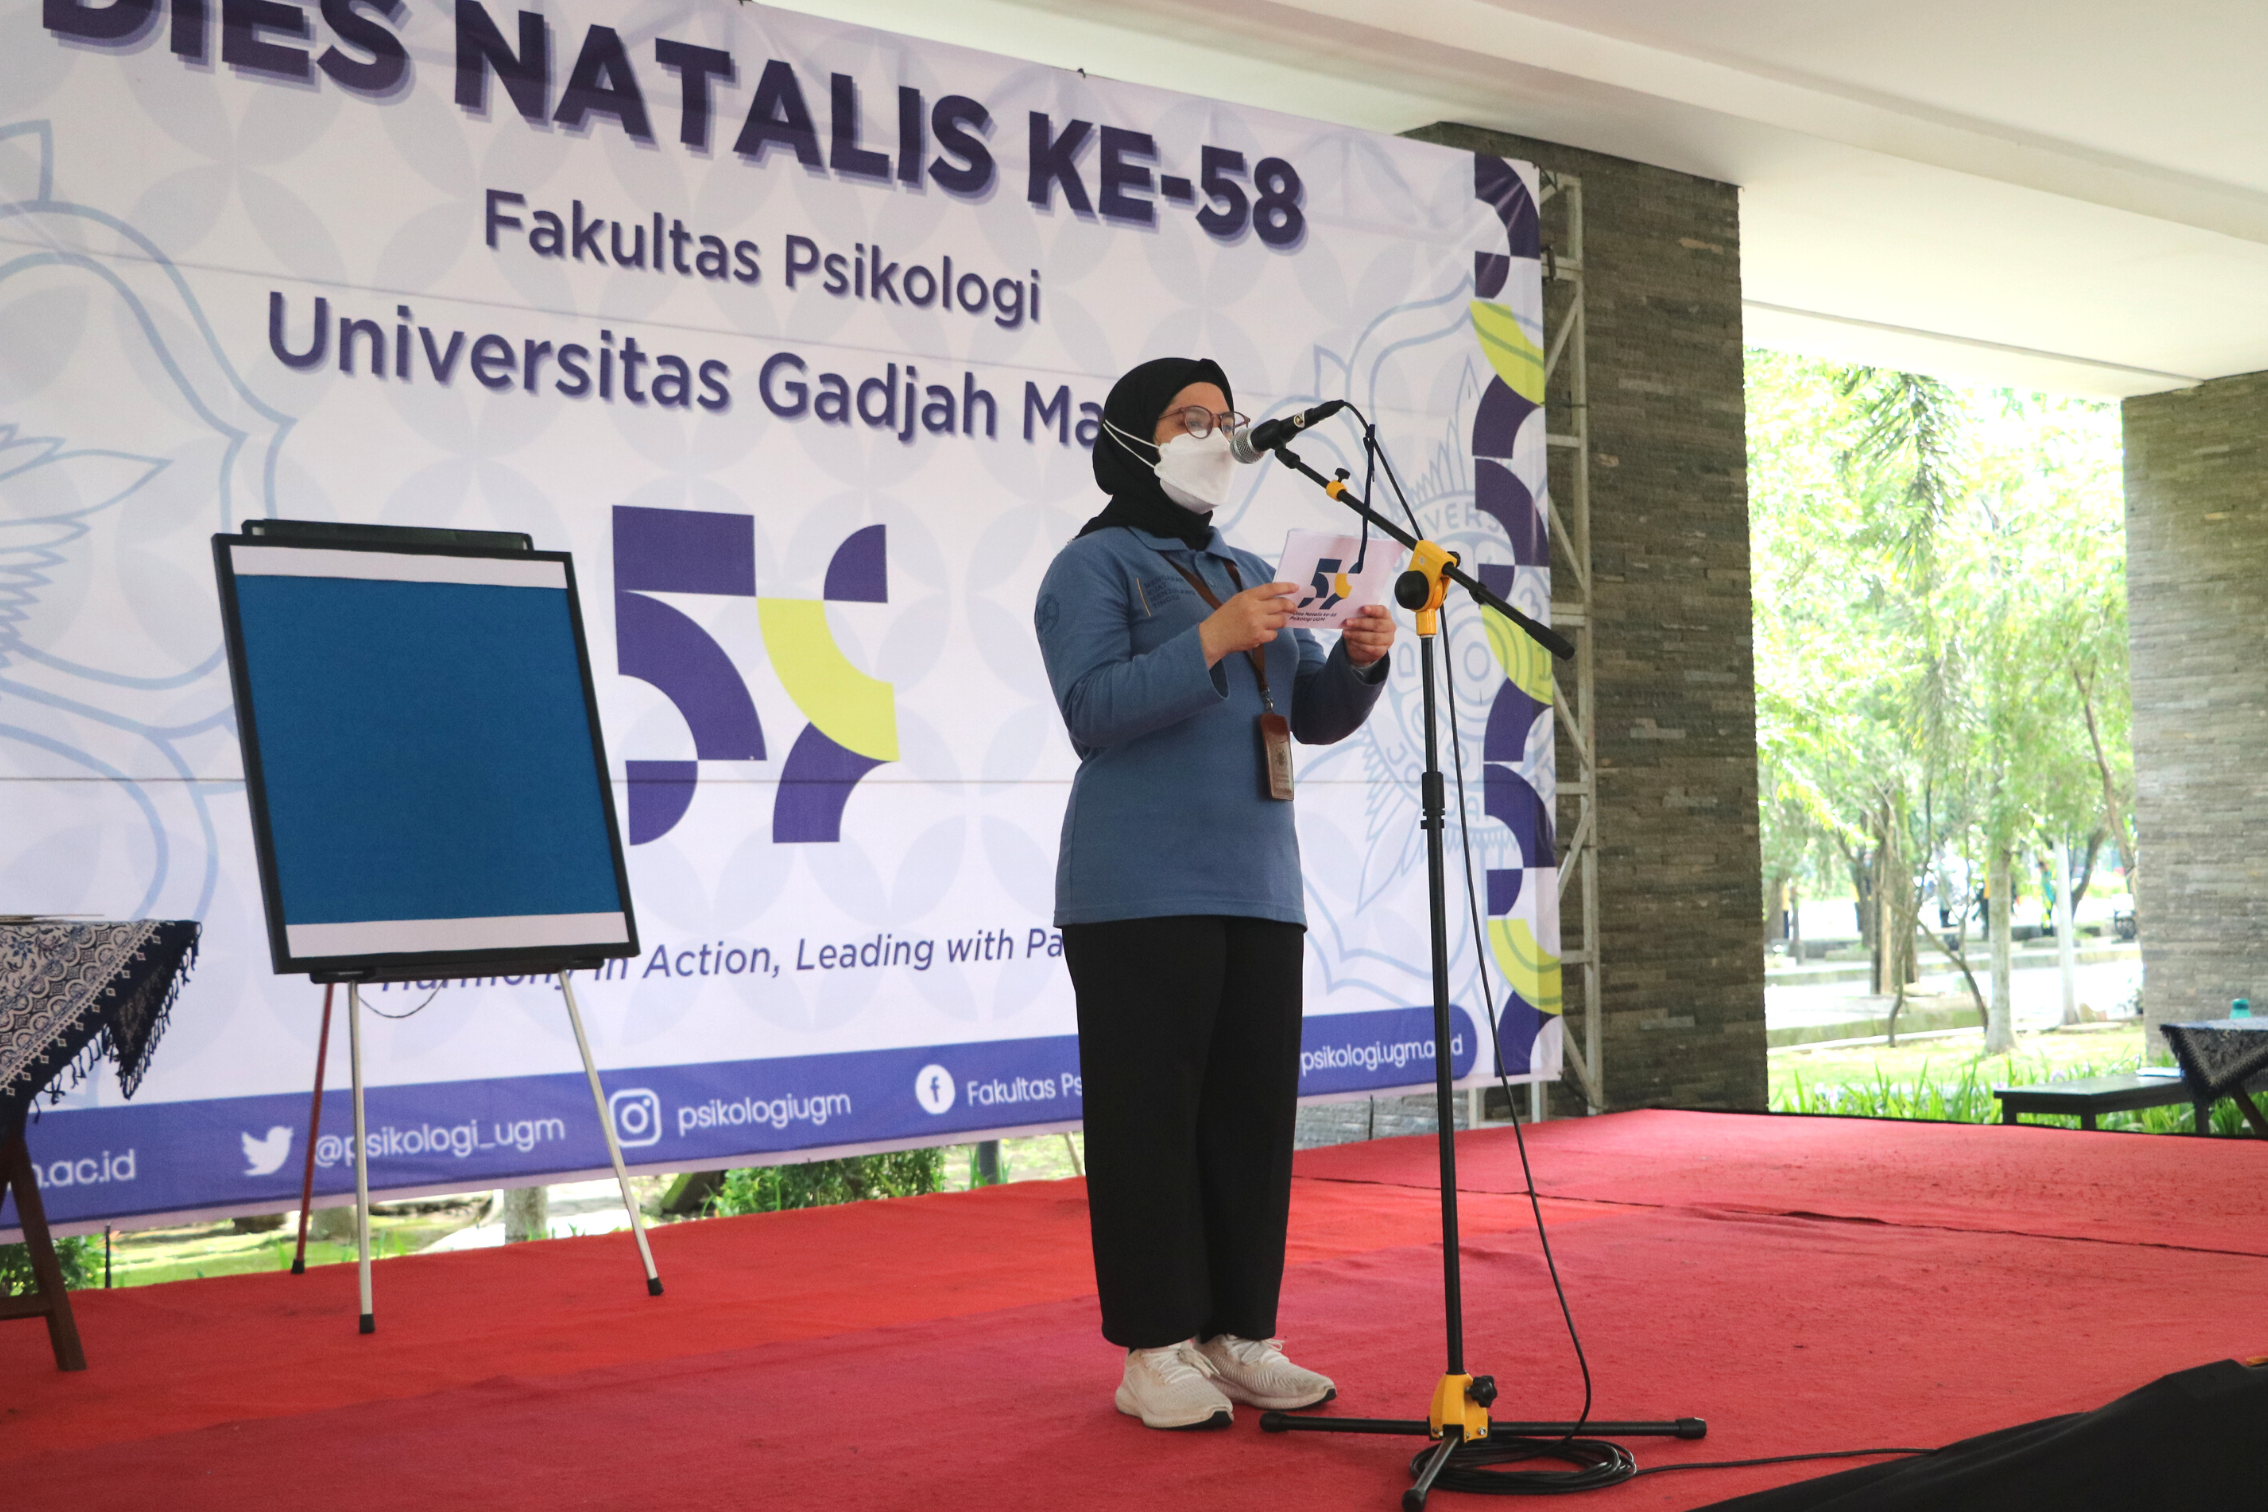 Pembukaan Dies Natalis Ke-58 Fakultas Psikologi UGM: Harmony in Action, Leading with Passion